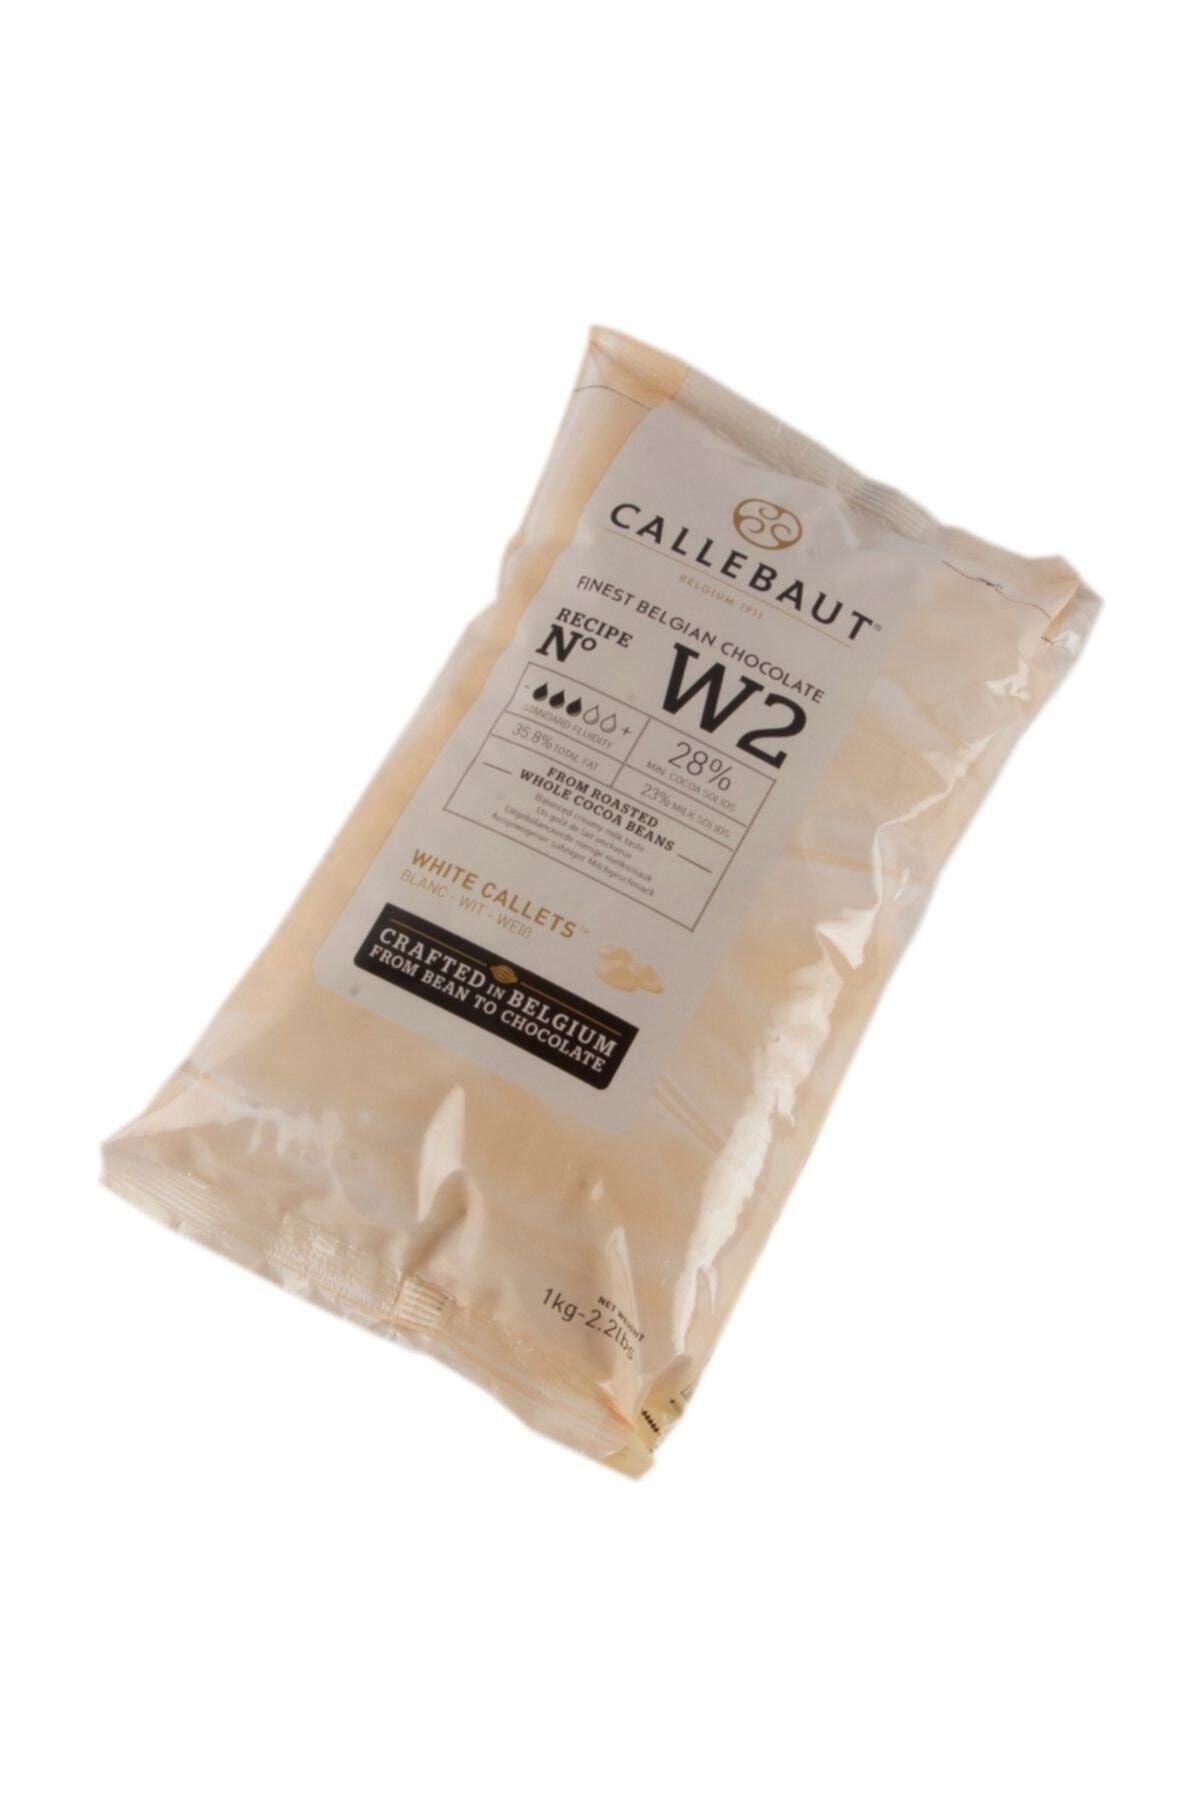 Callebaut W2 Beyaz Damla Çikolata W2 (1 KG)